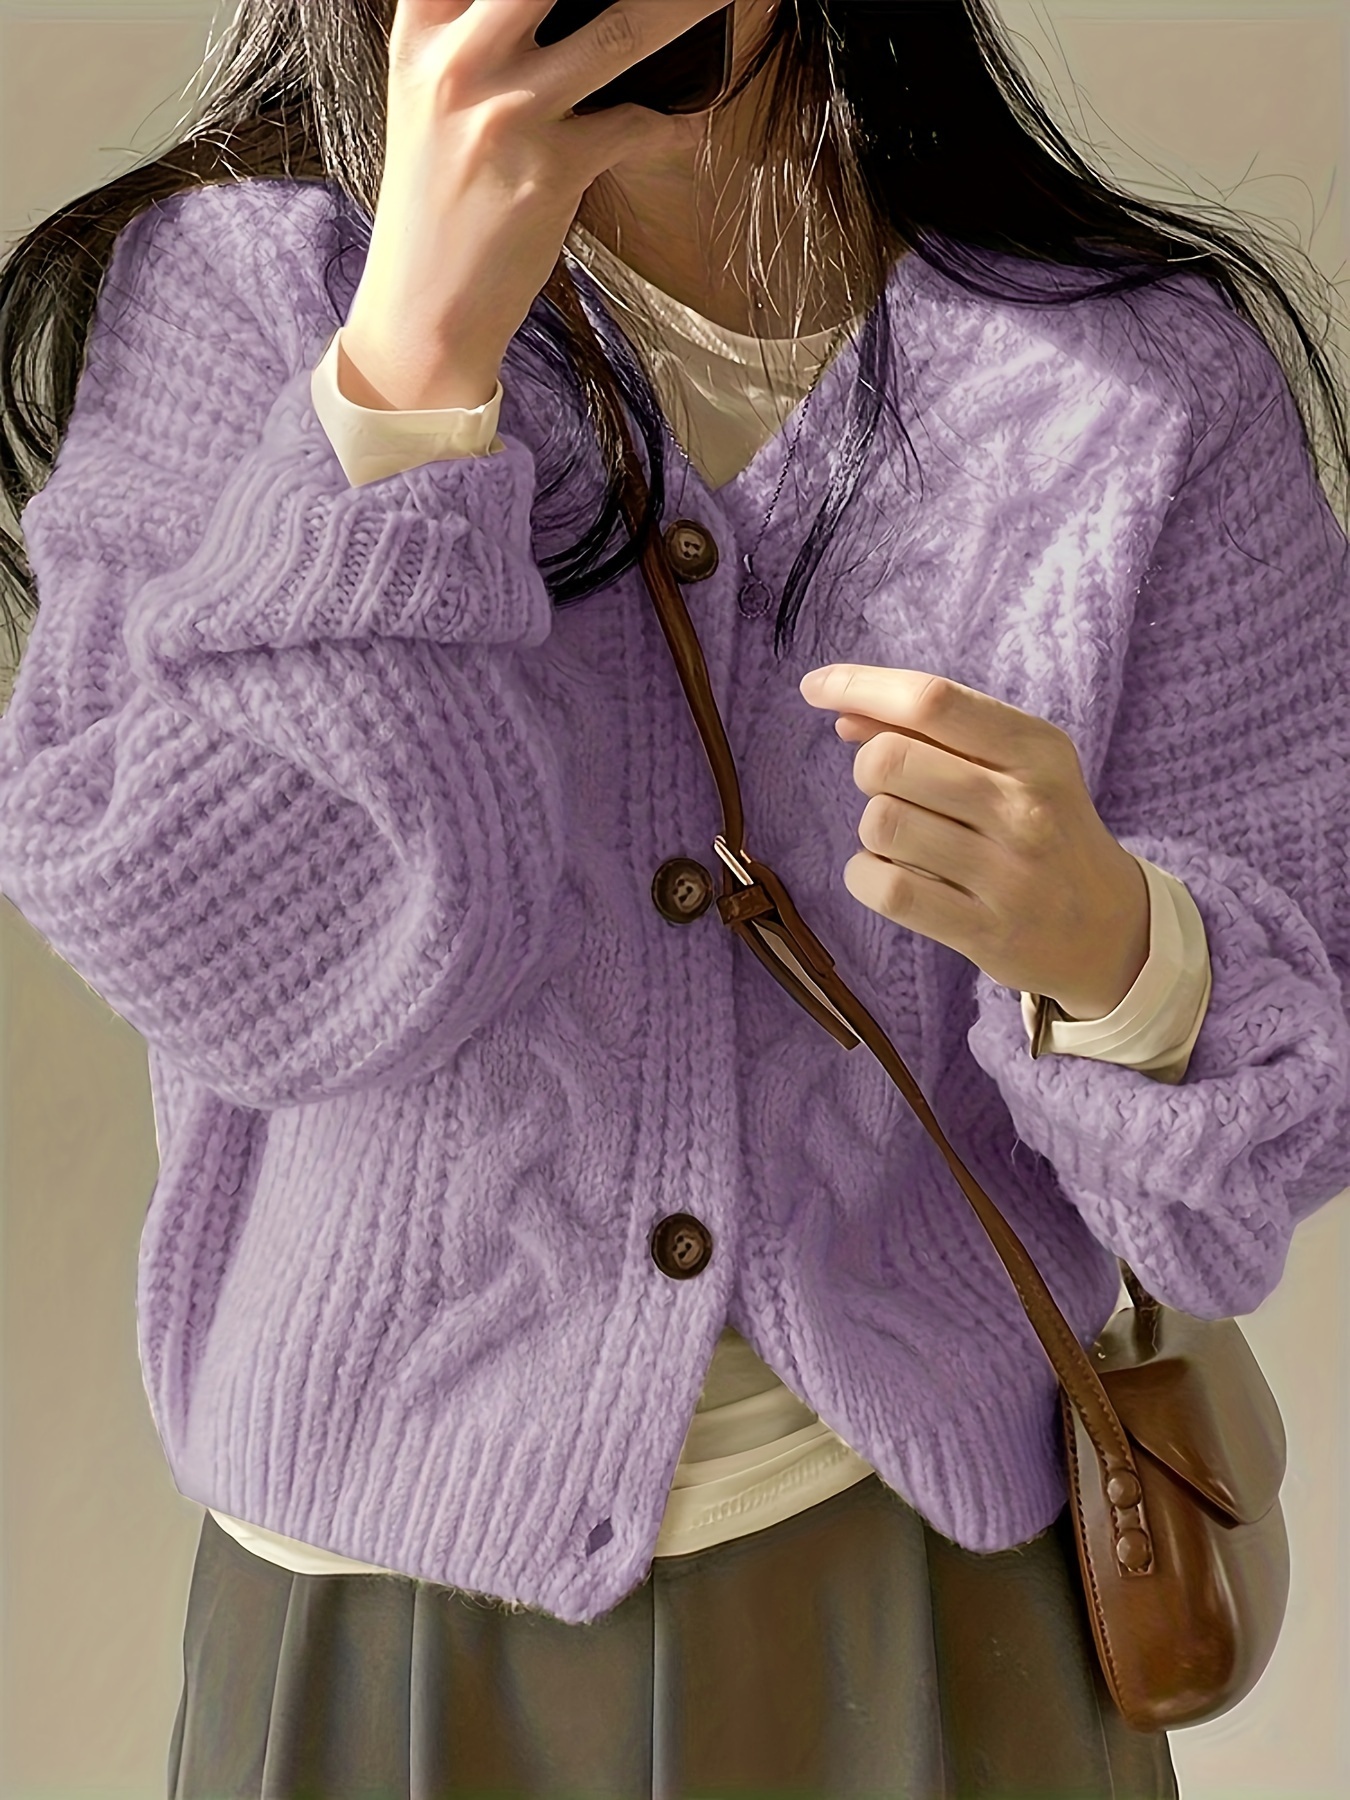 Korean women girls knitting long sleeve pocket dress autumn winter Ladies  sweate